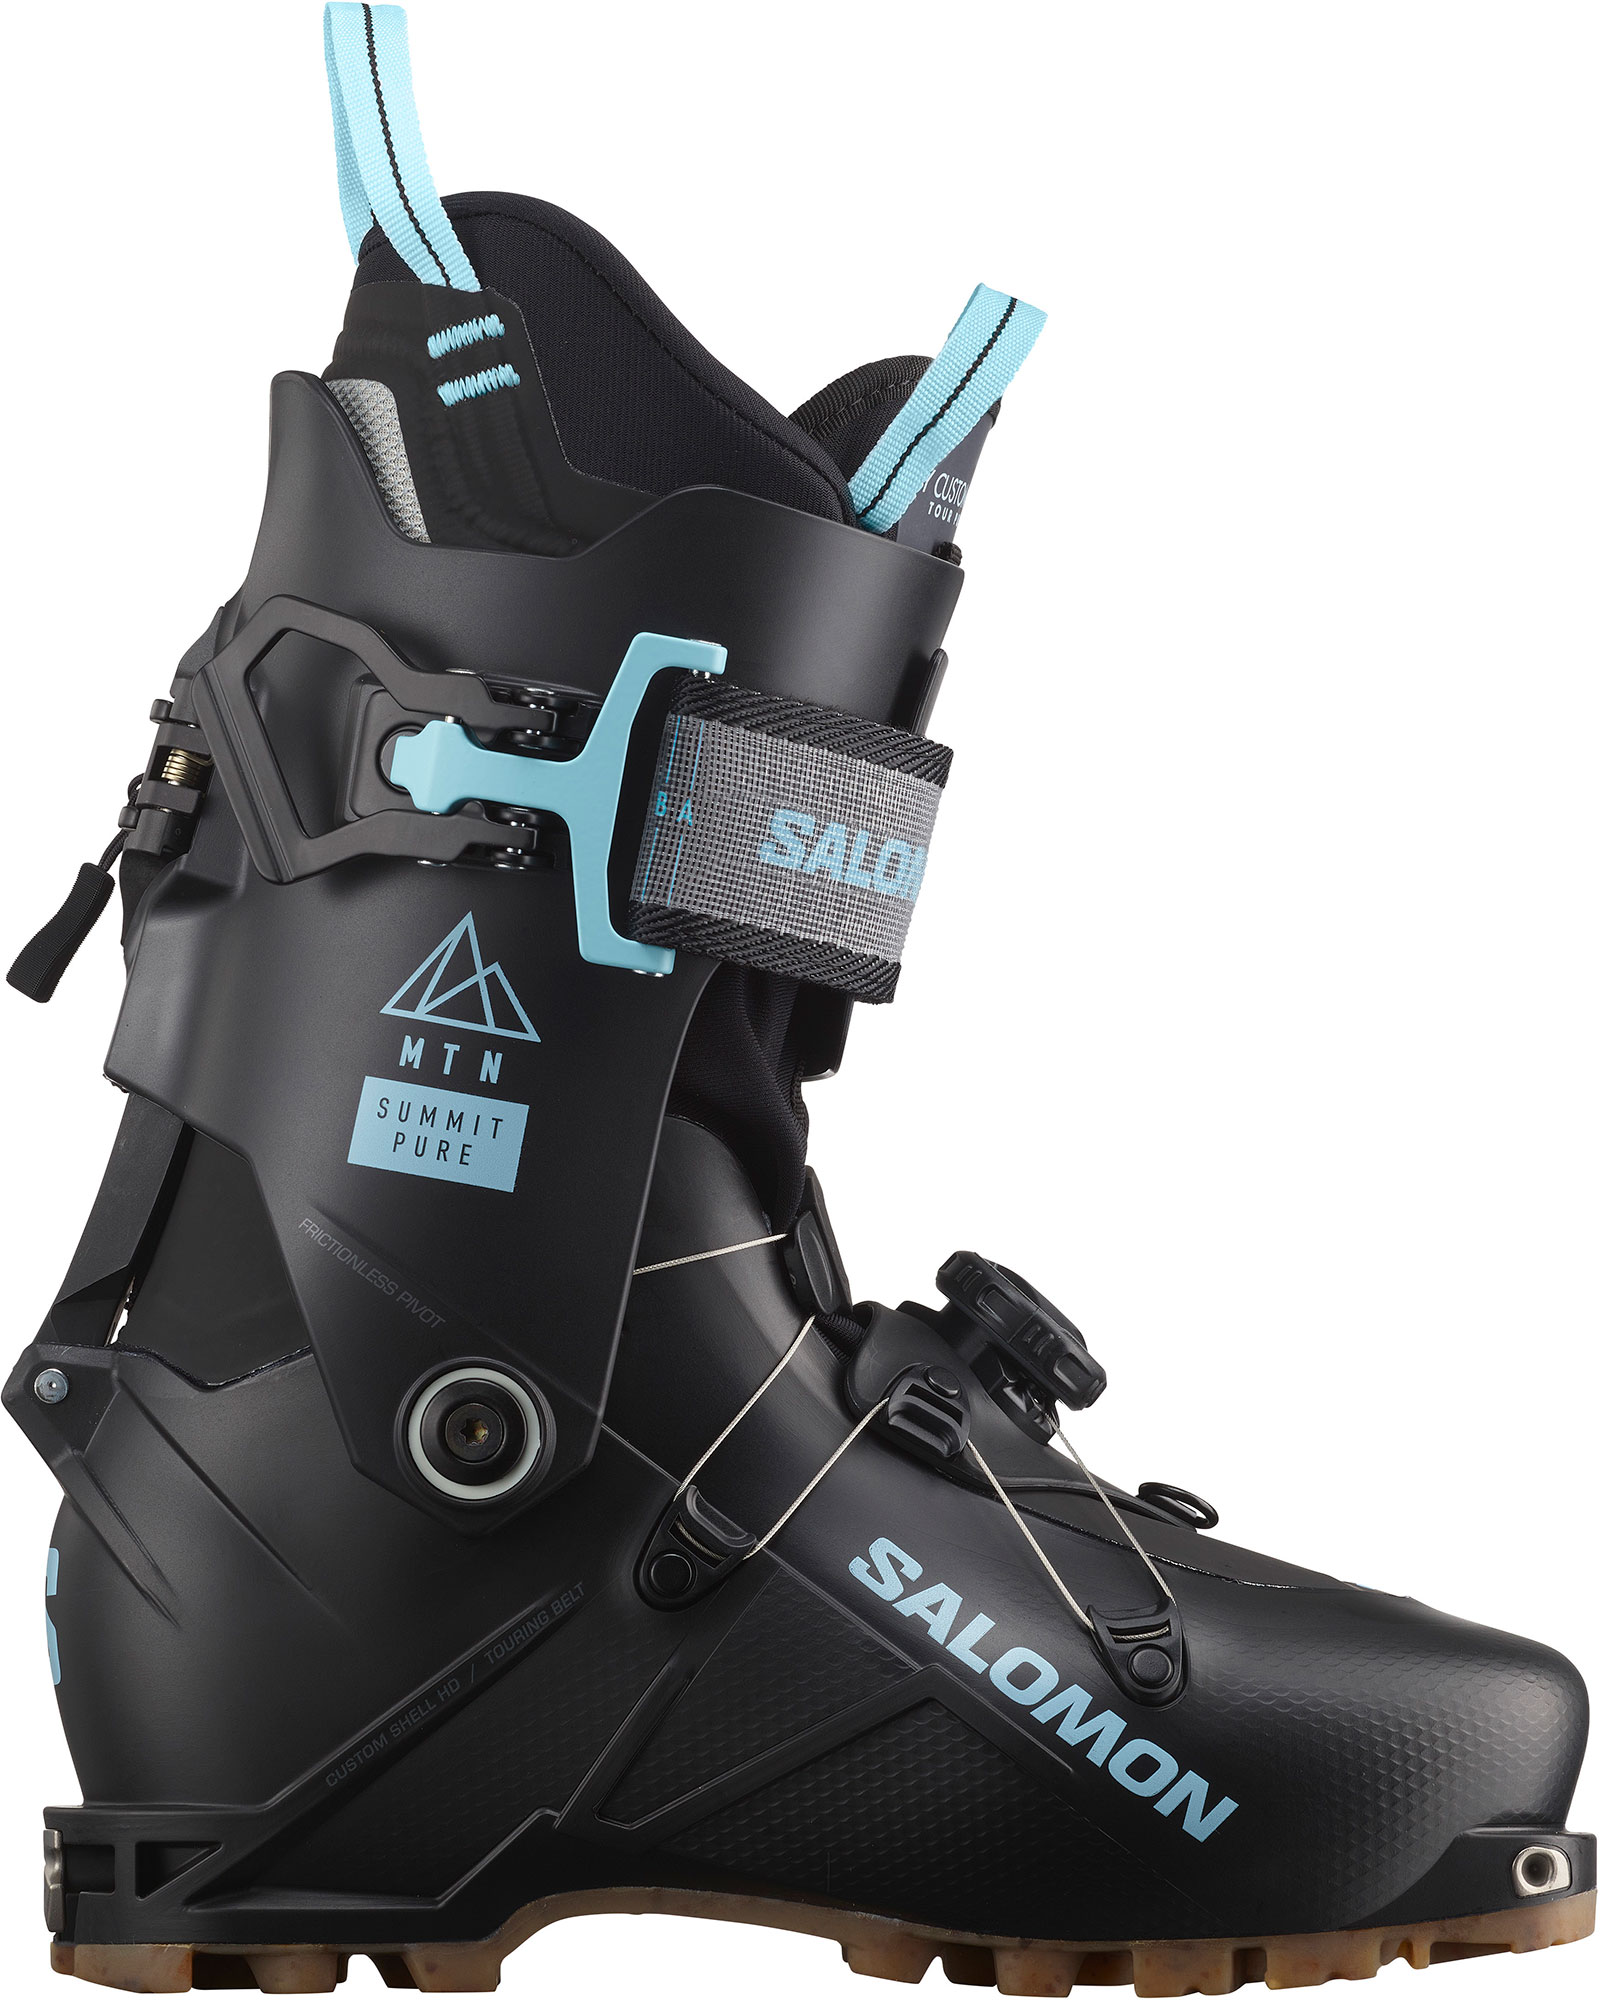 Salomon MTN Summit Pure Women’s Ski Boots 2023 - Black/Rainy Day MP 26.5